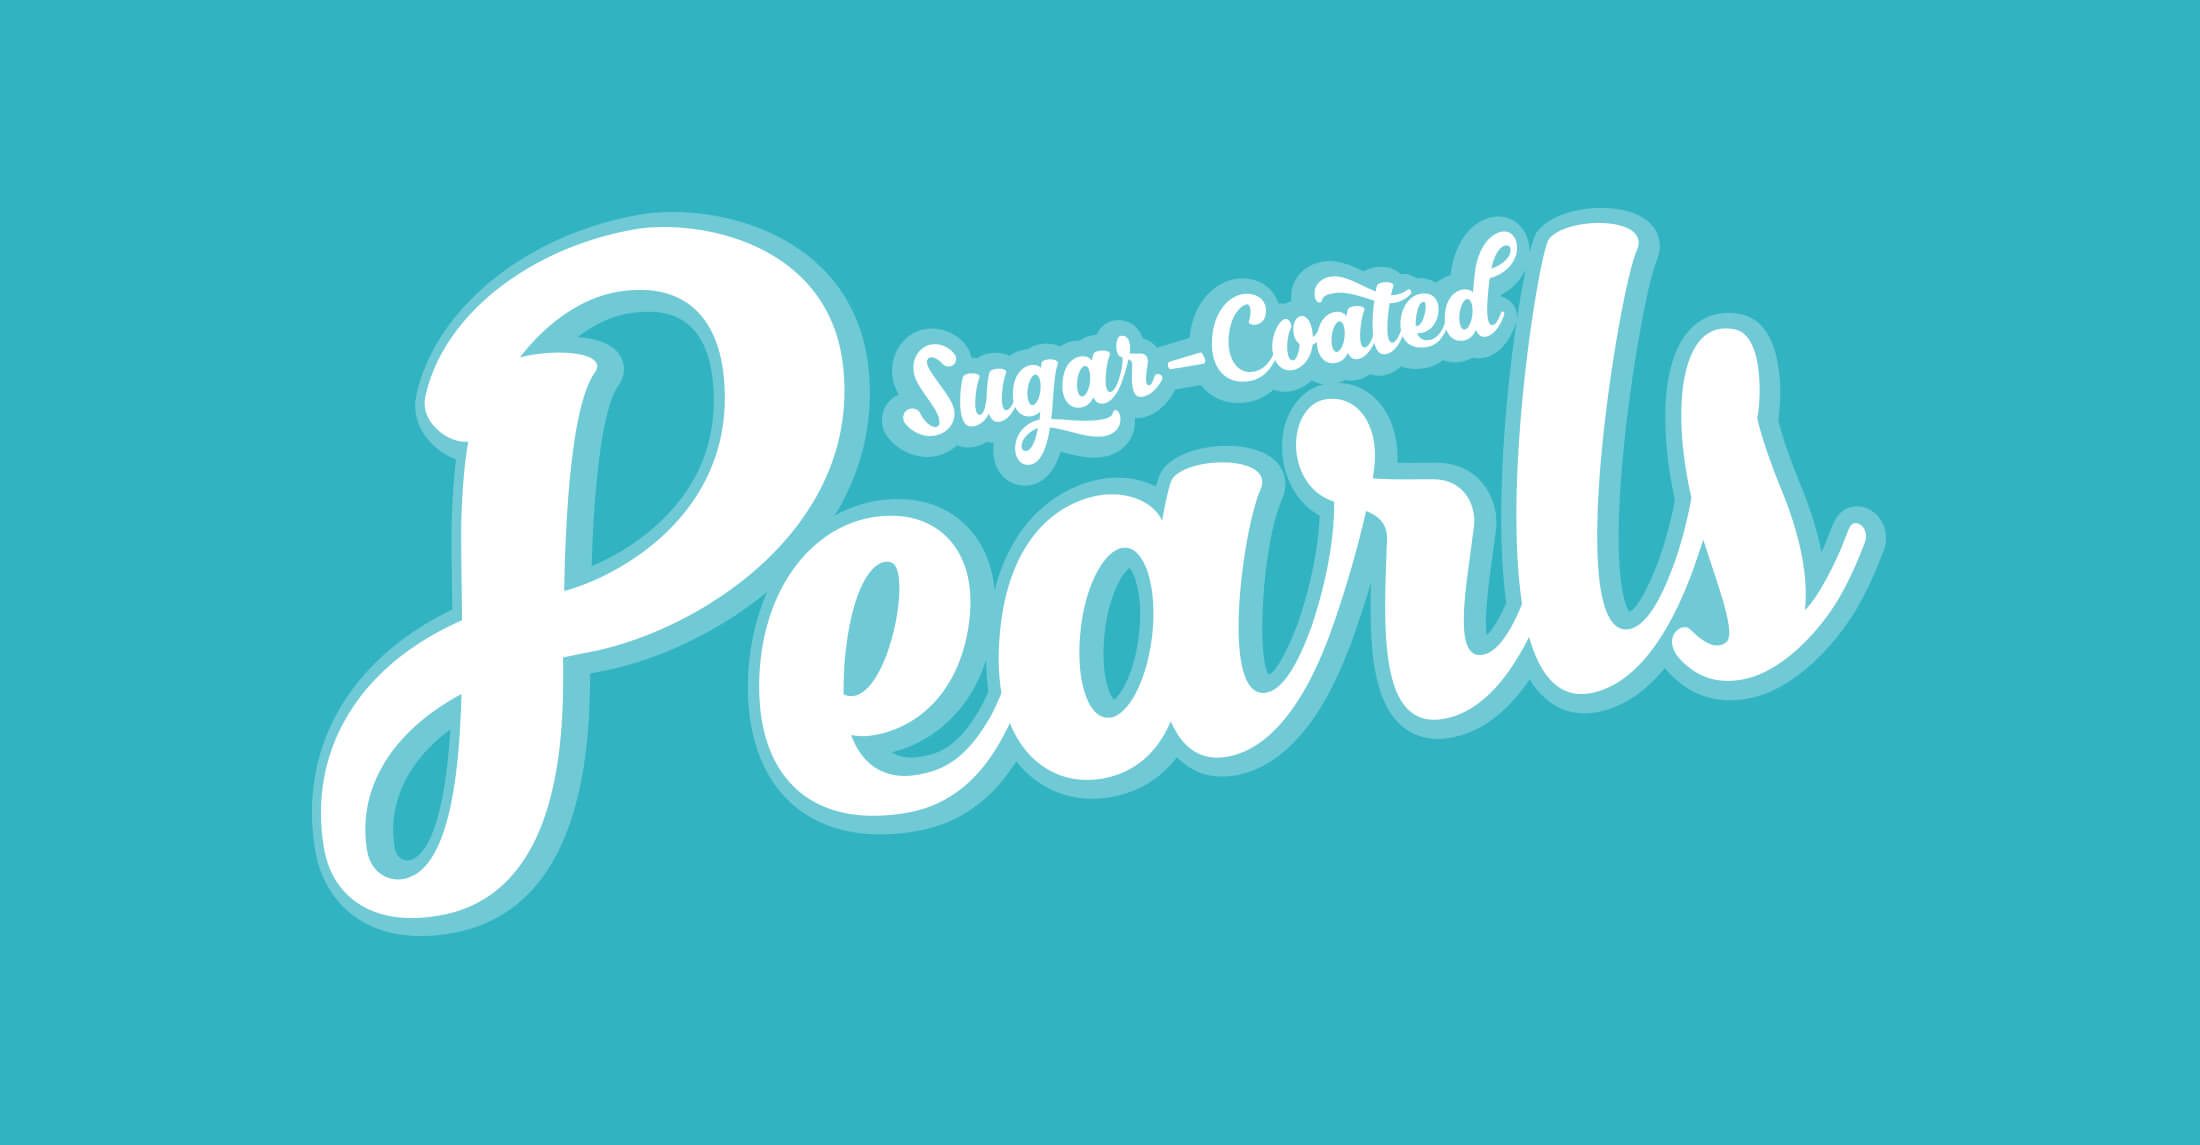 pearls_logo_wide